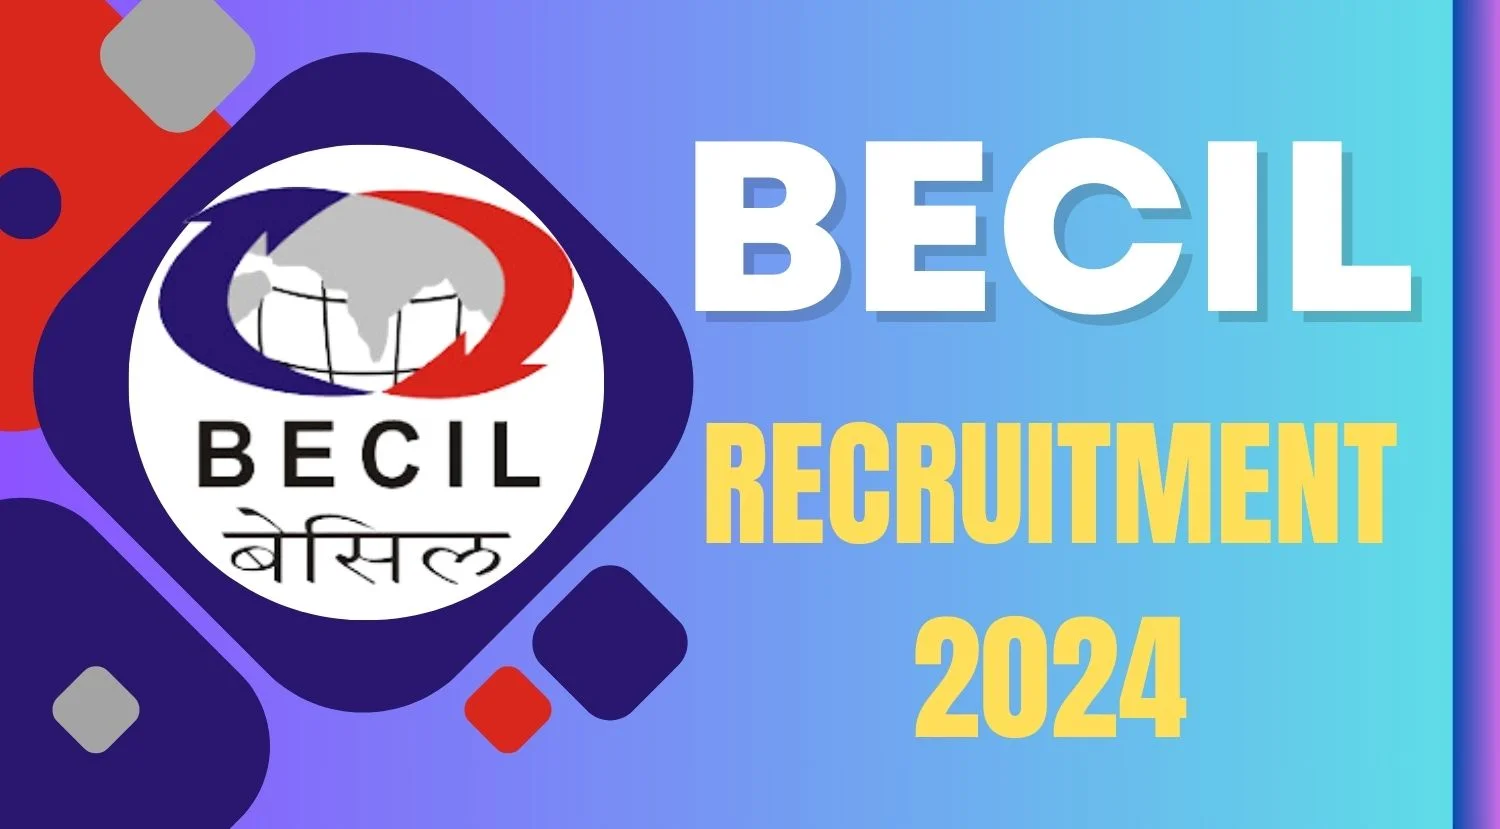 BECIL Executive Engineer Recruitment 2024